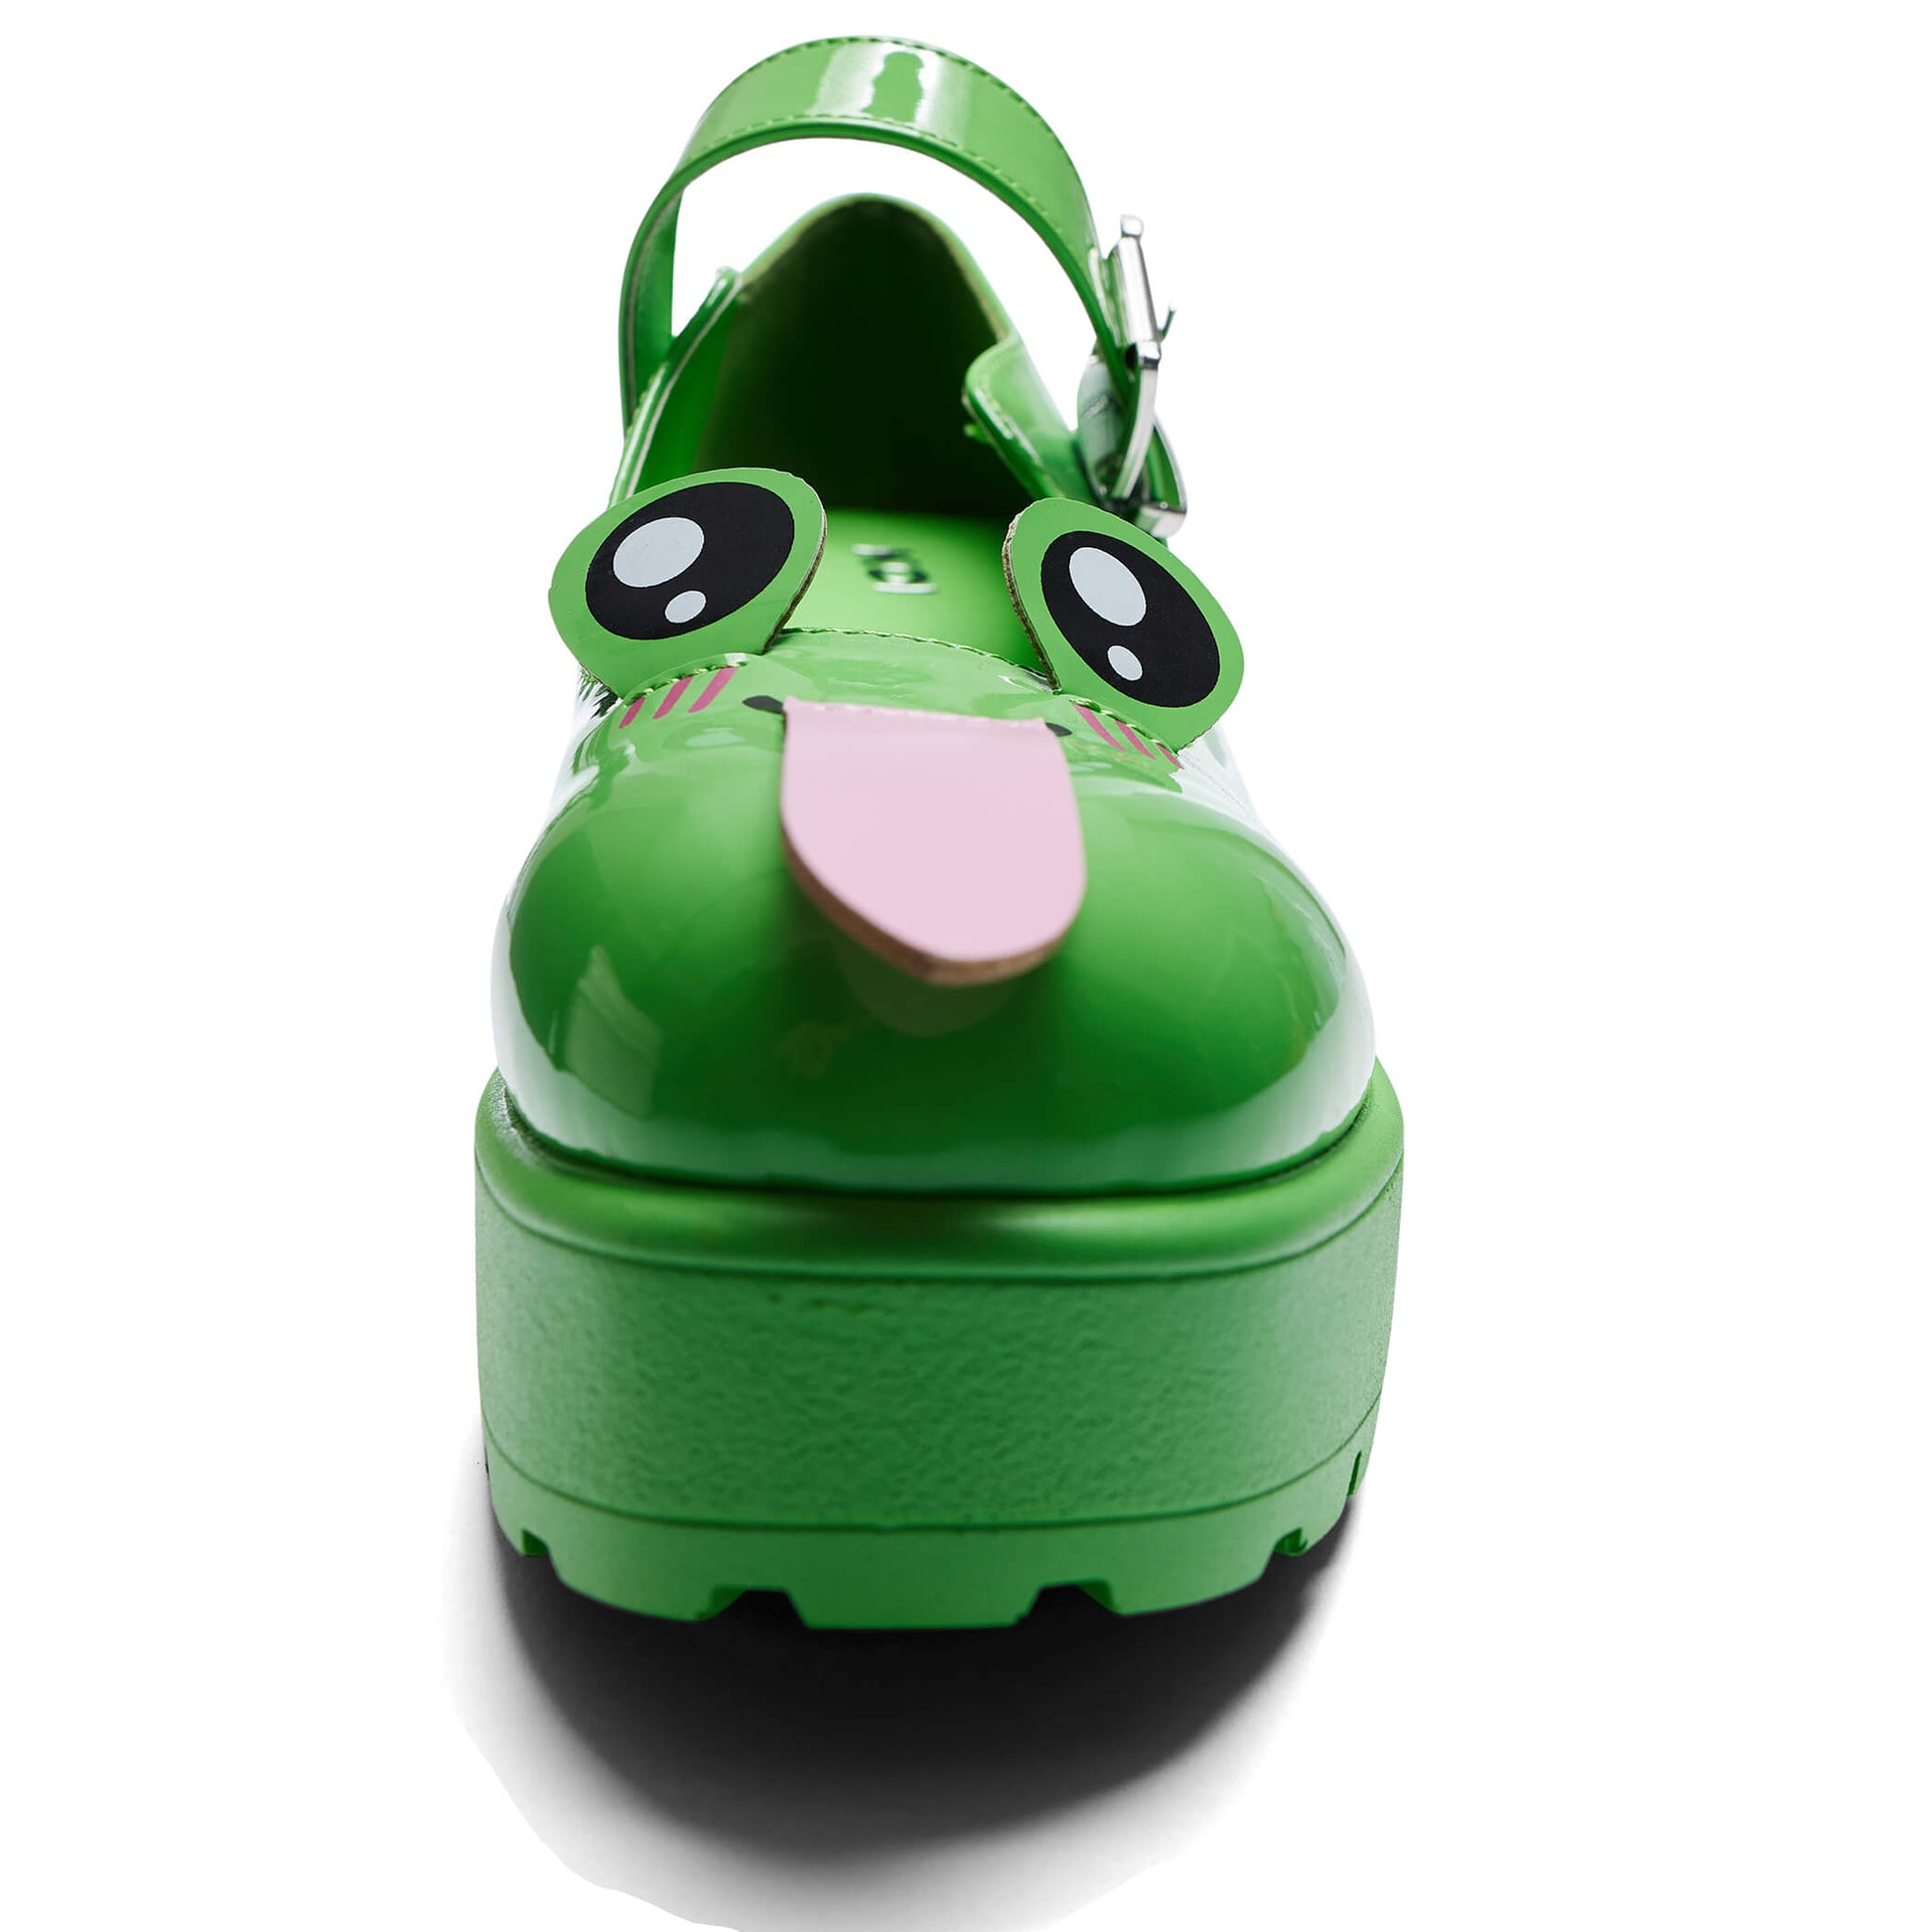 Tira Mary Jane Shoes ‘Cheeky Frog Edition’ - Mary Janes - KOI Footwear - Green - Platform Detail